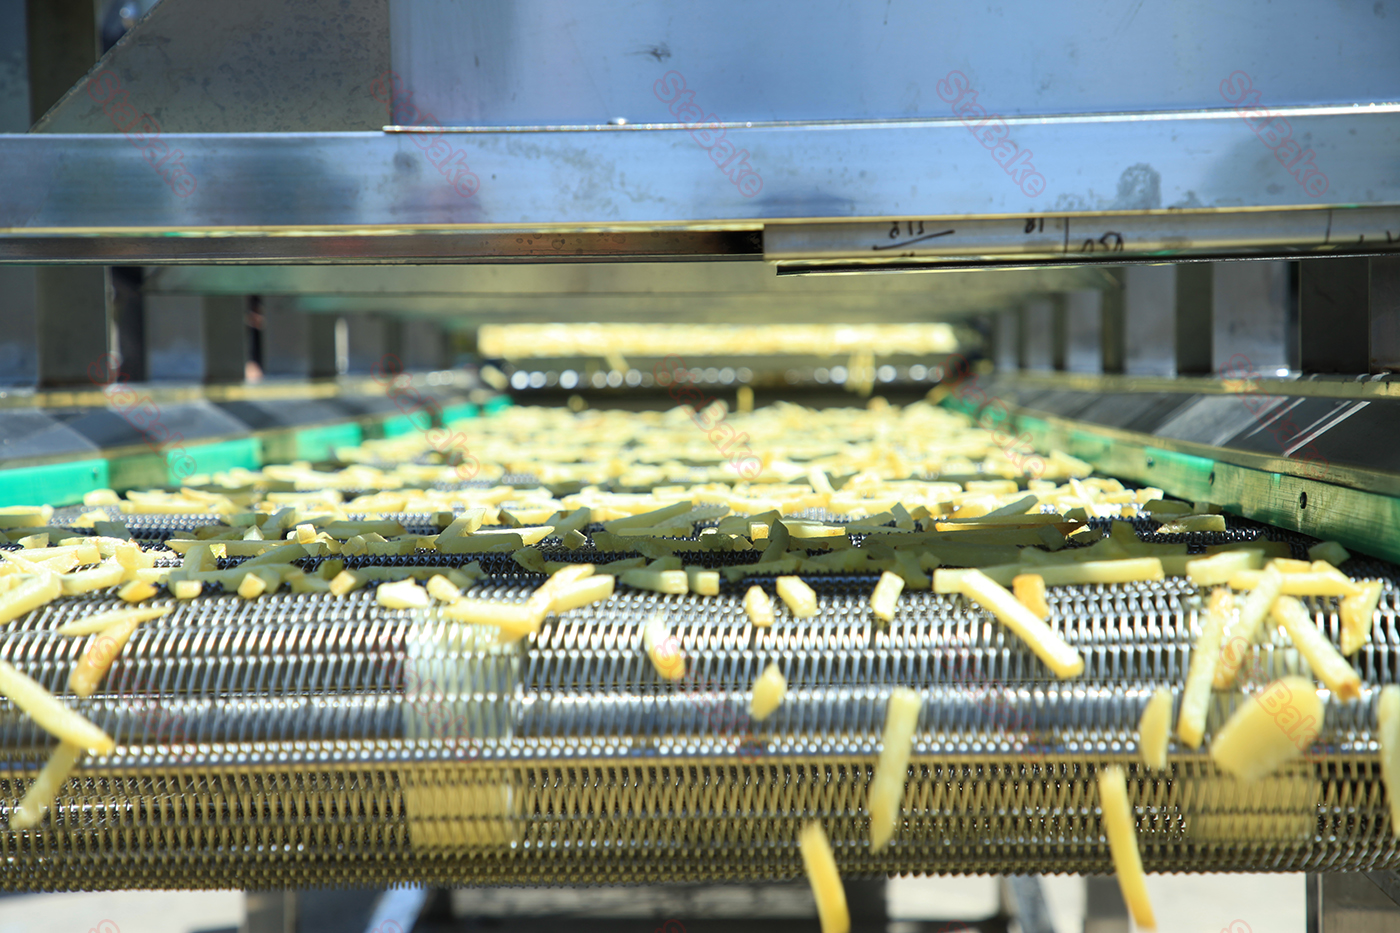 French Fries Production Line: Revolutionizing Potato Chips Making